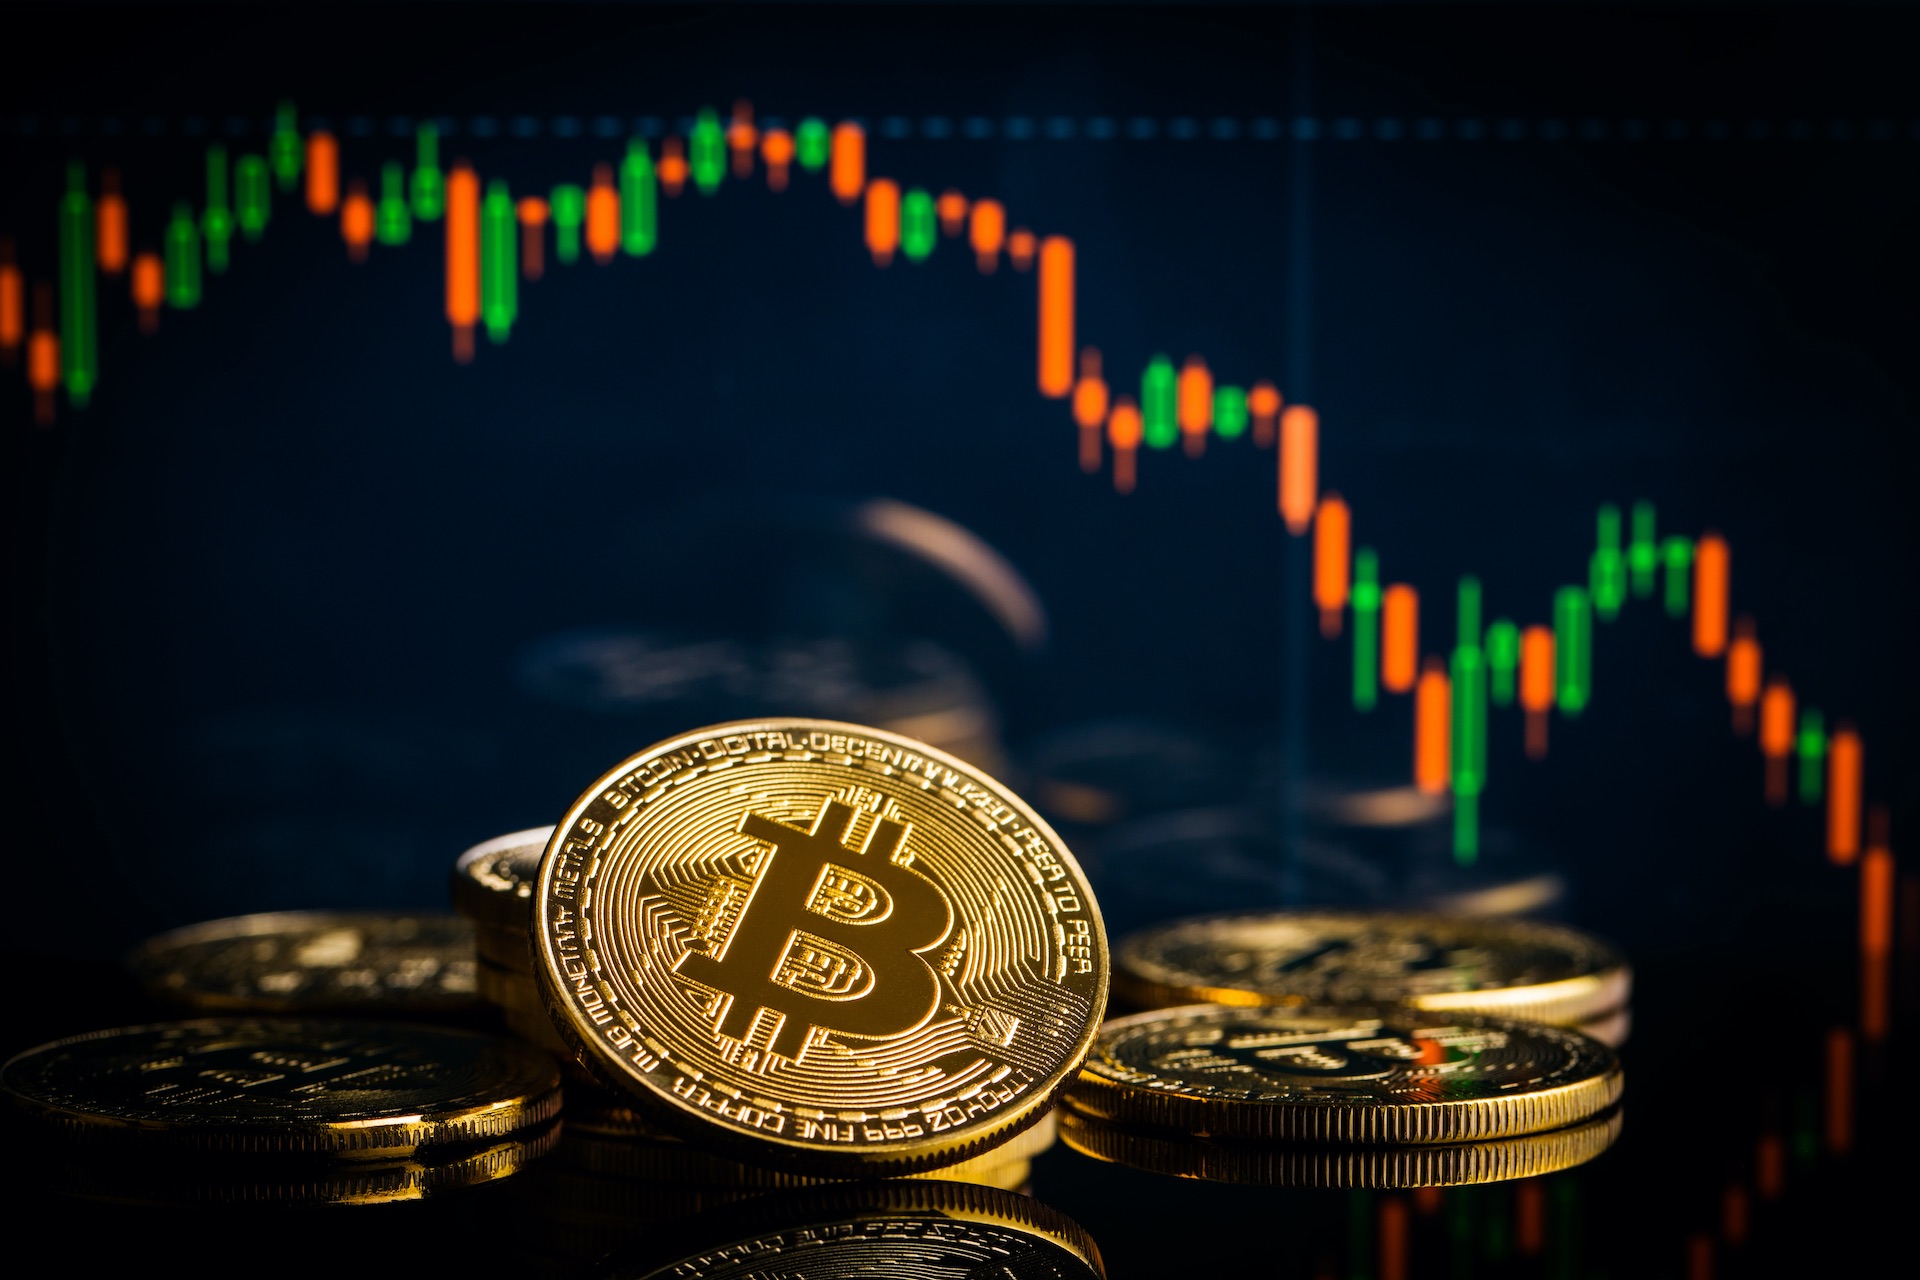 Bitcoin plummets below $27K reversing 2021 gains as crypto risk escalates